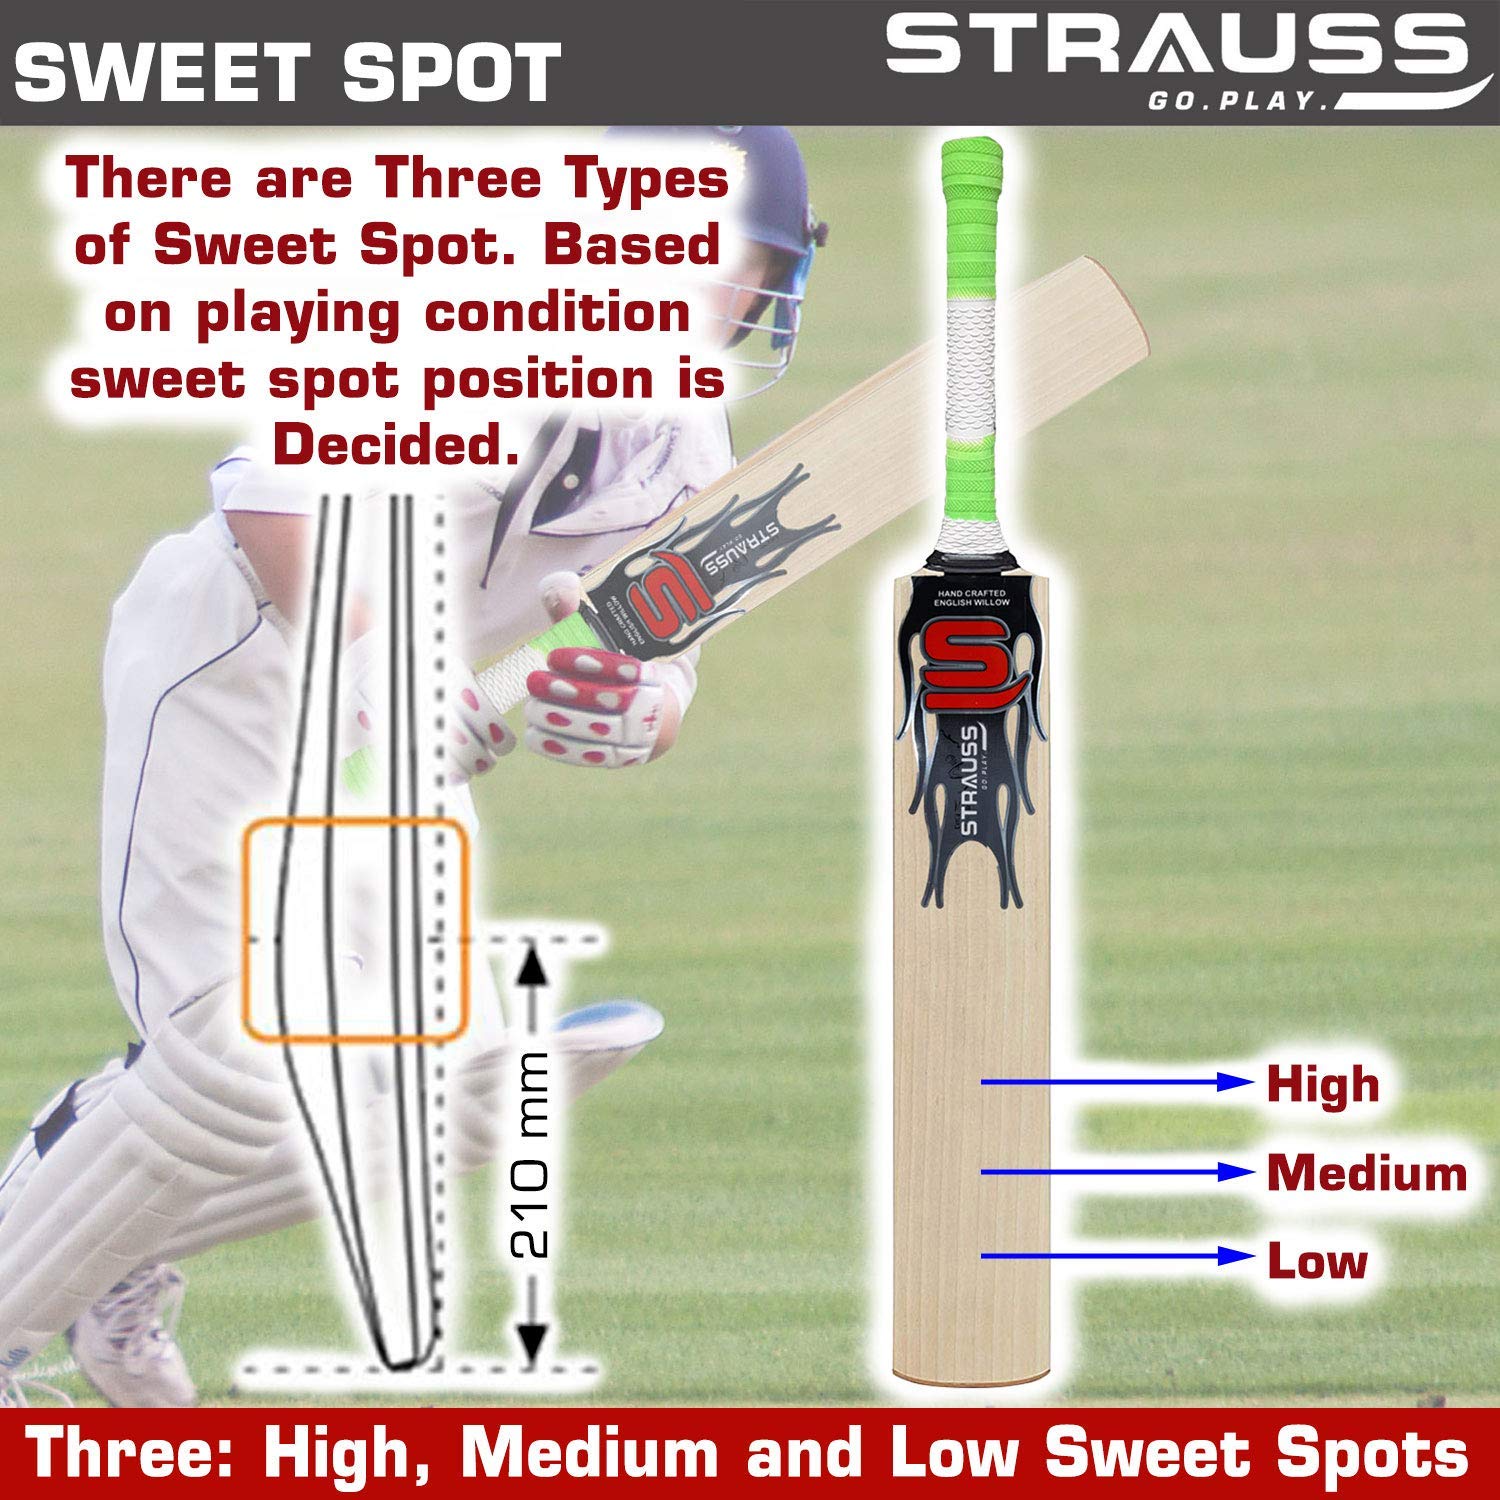 Strauss Cricket Bat | Edition: Advanced | English Willow | Size: Short Handle | Grade: 1 | Premium Leather Ball Cricket Bat